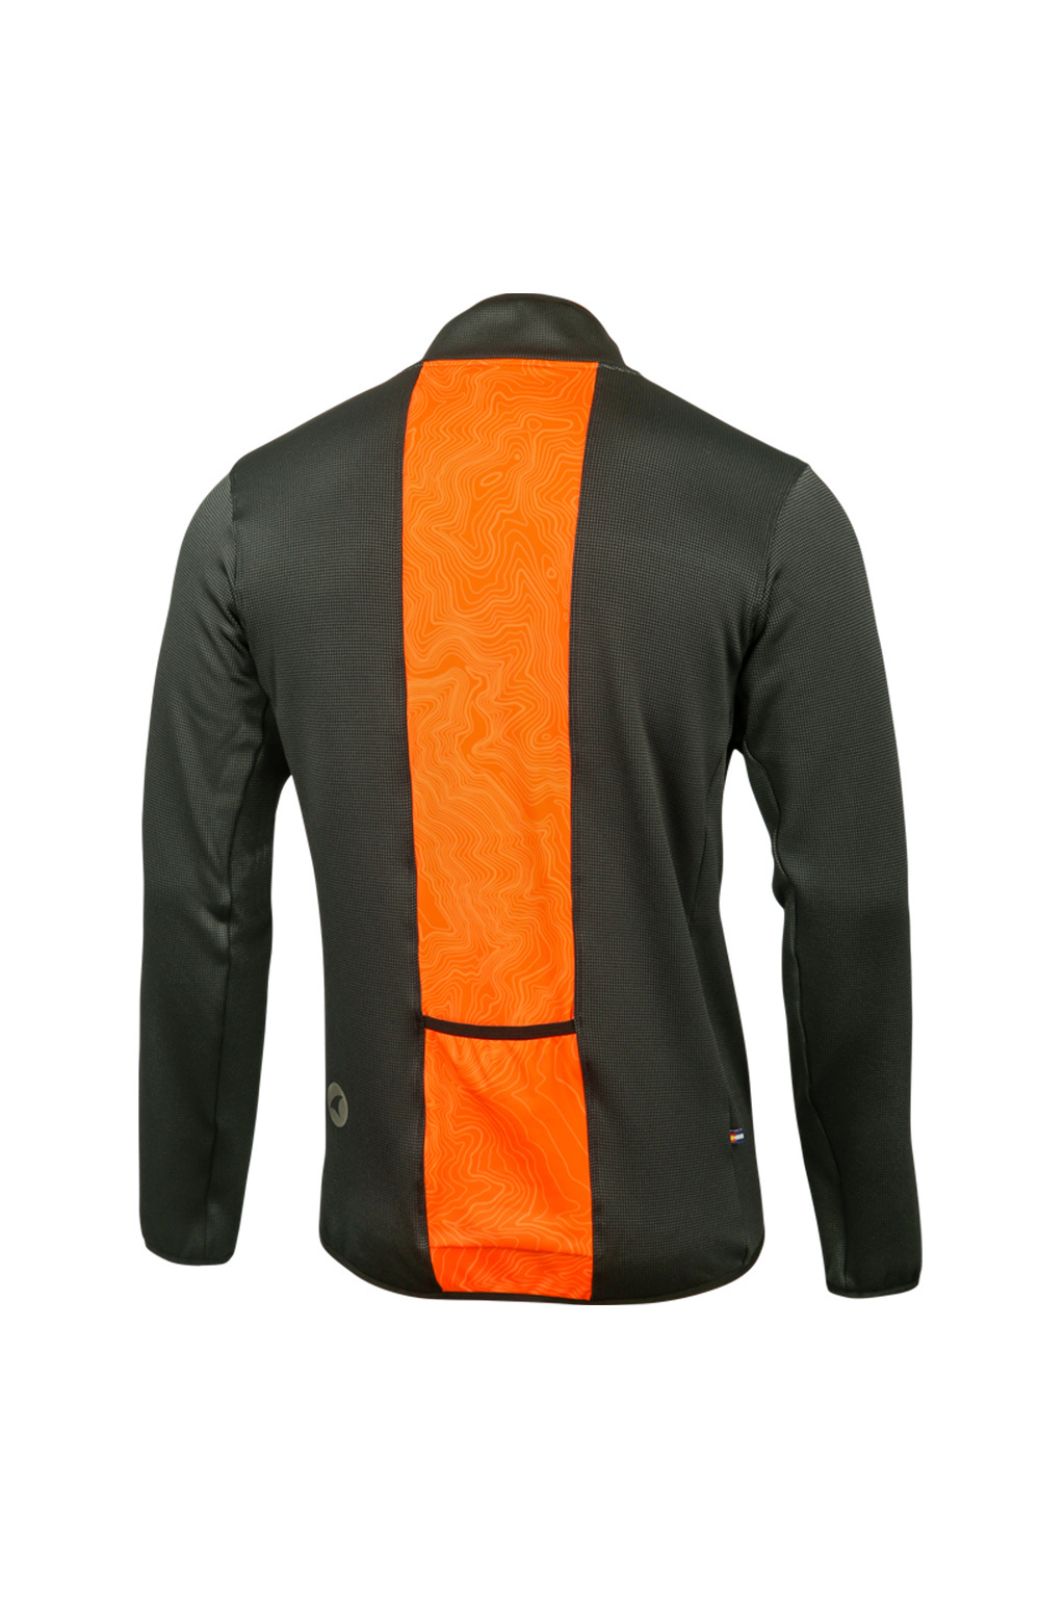 Men's Orange Cycling Track Jacket - Back View